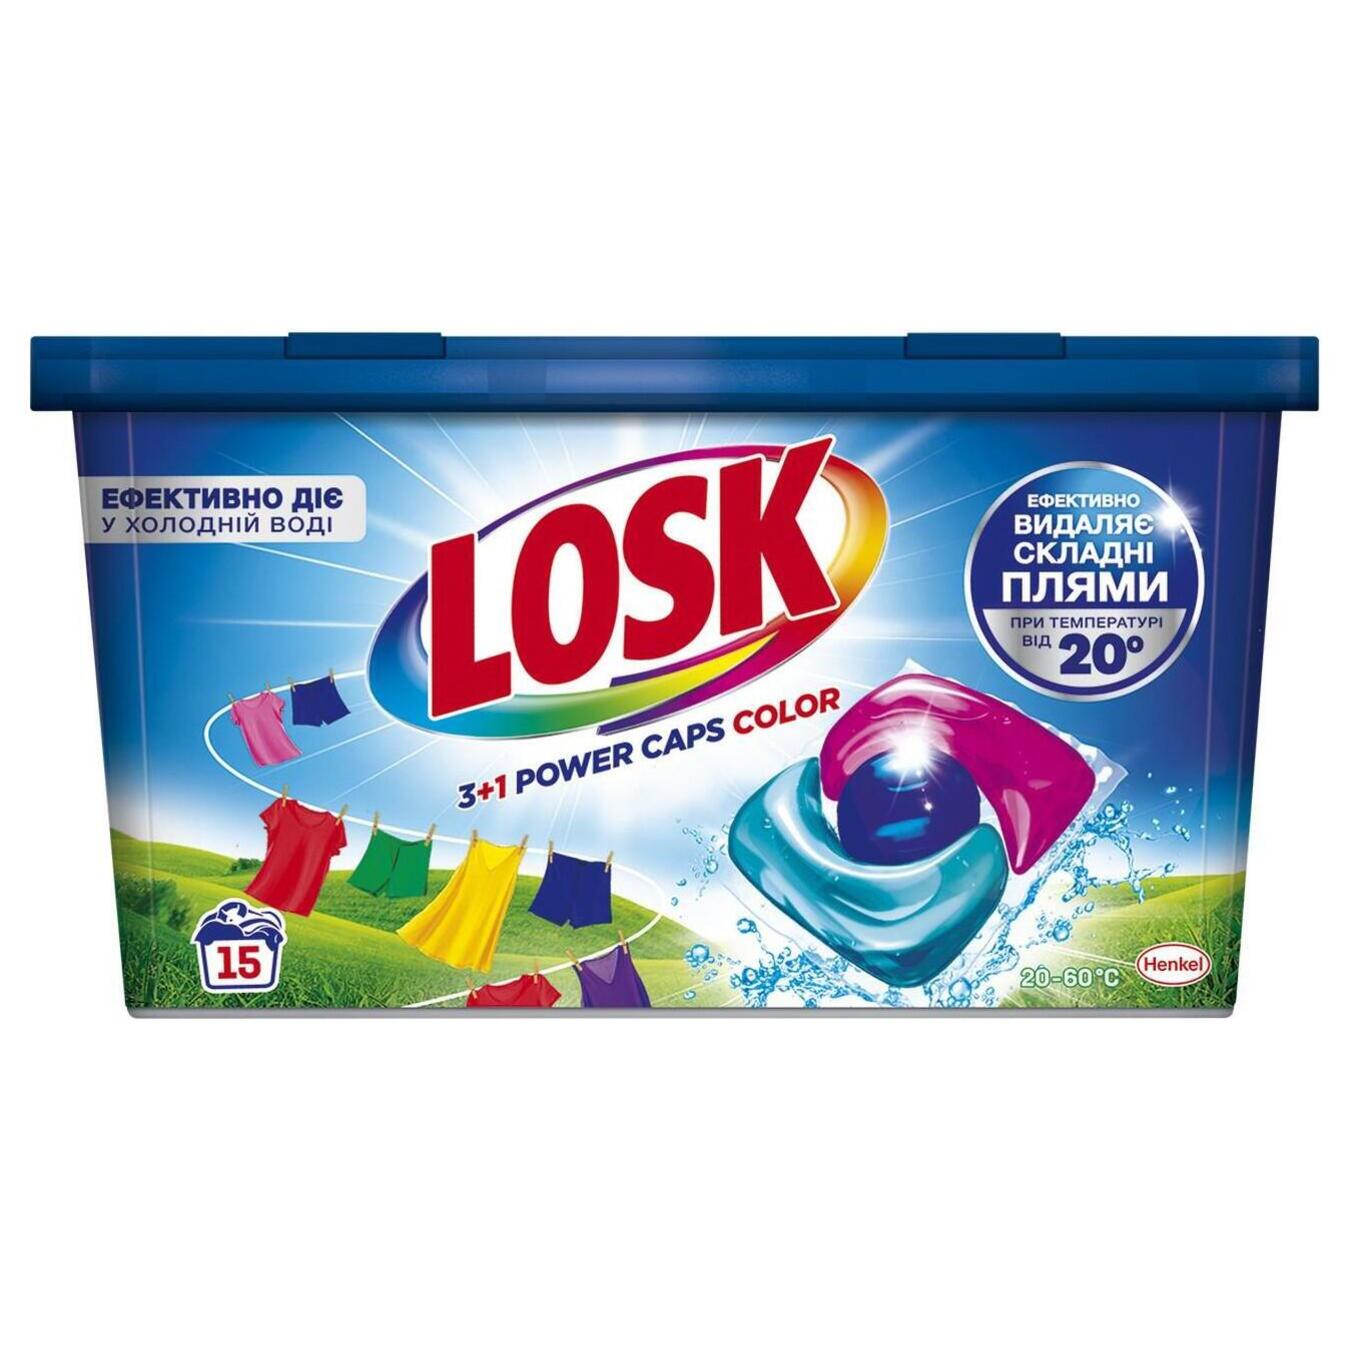 Capsules for washing Losk trio-capsules Color 15 pcs